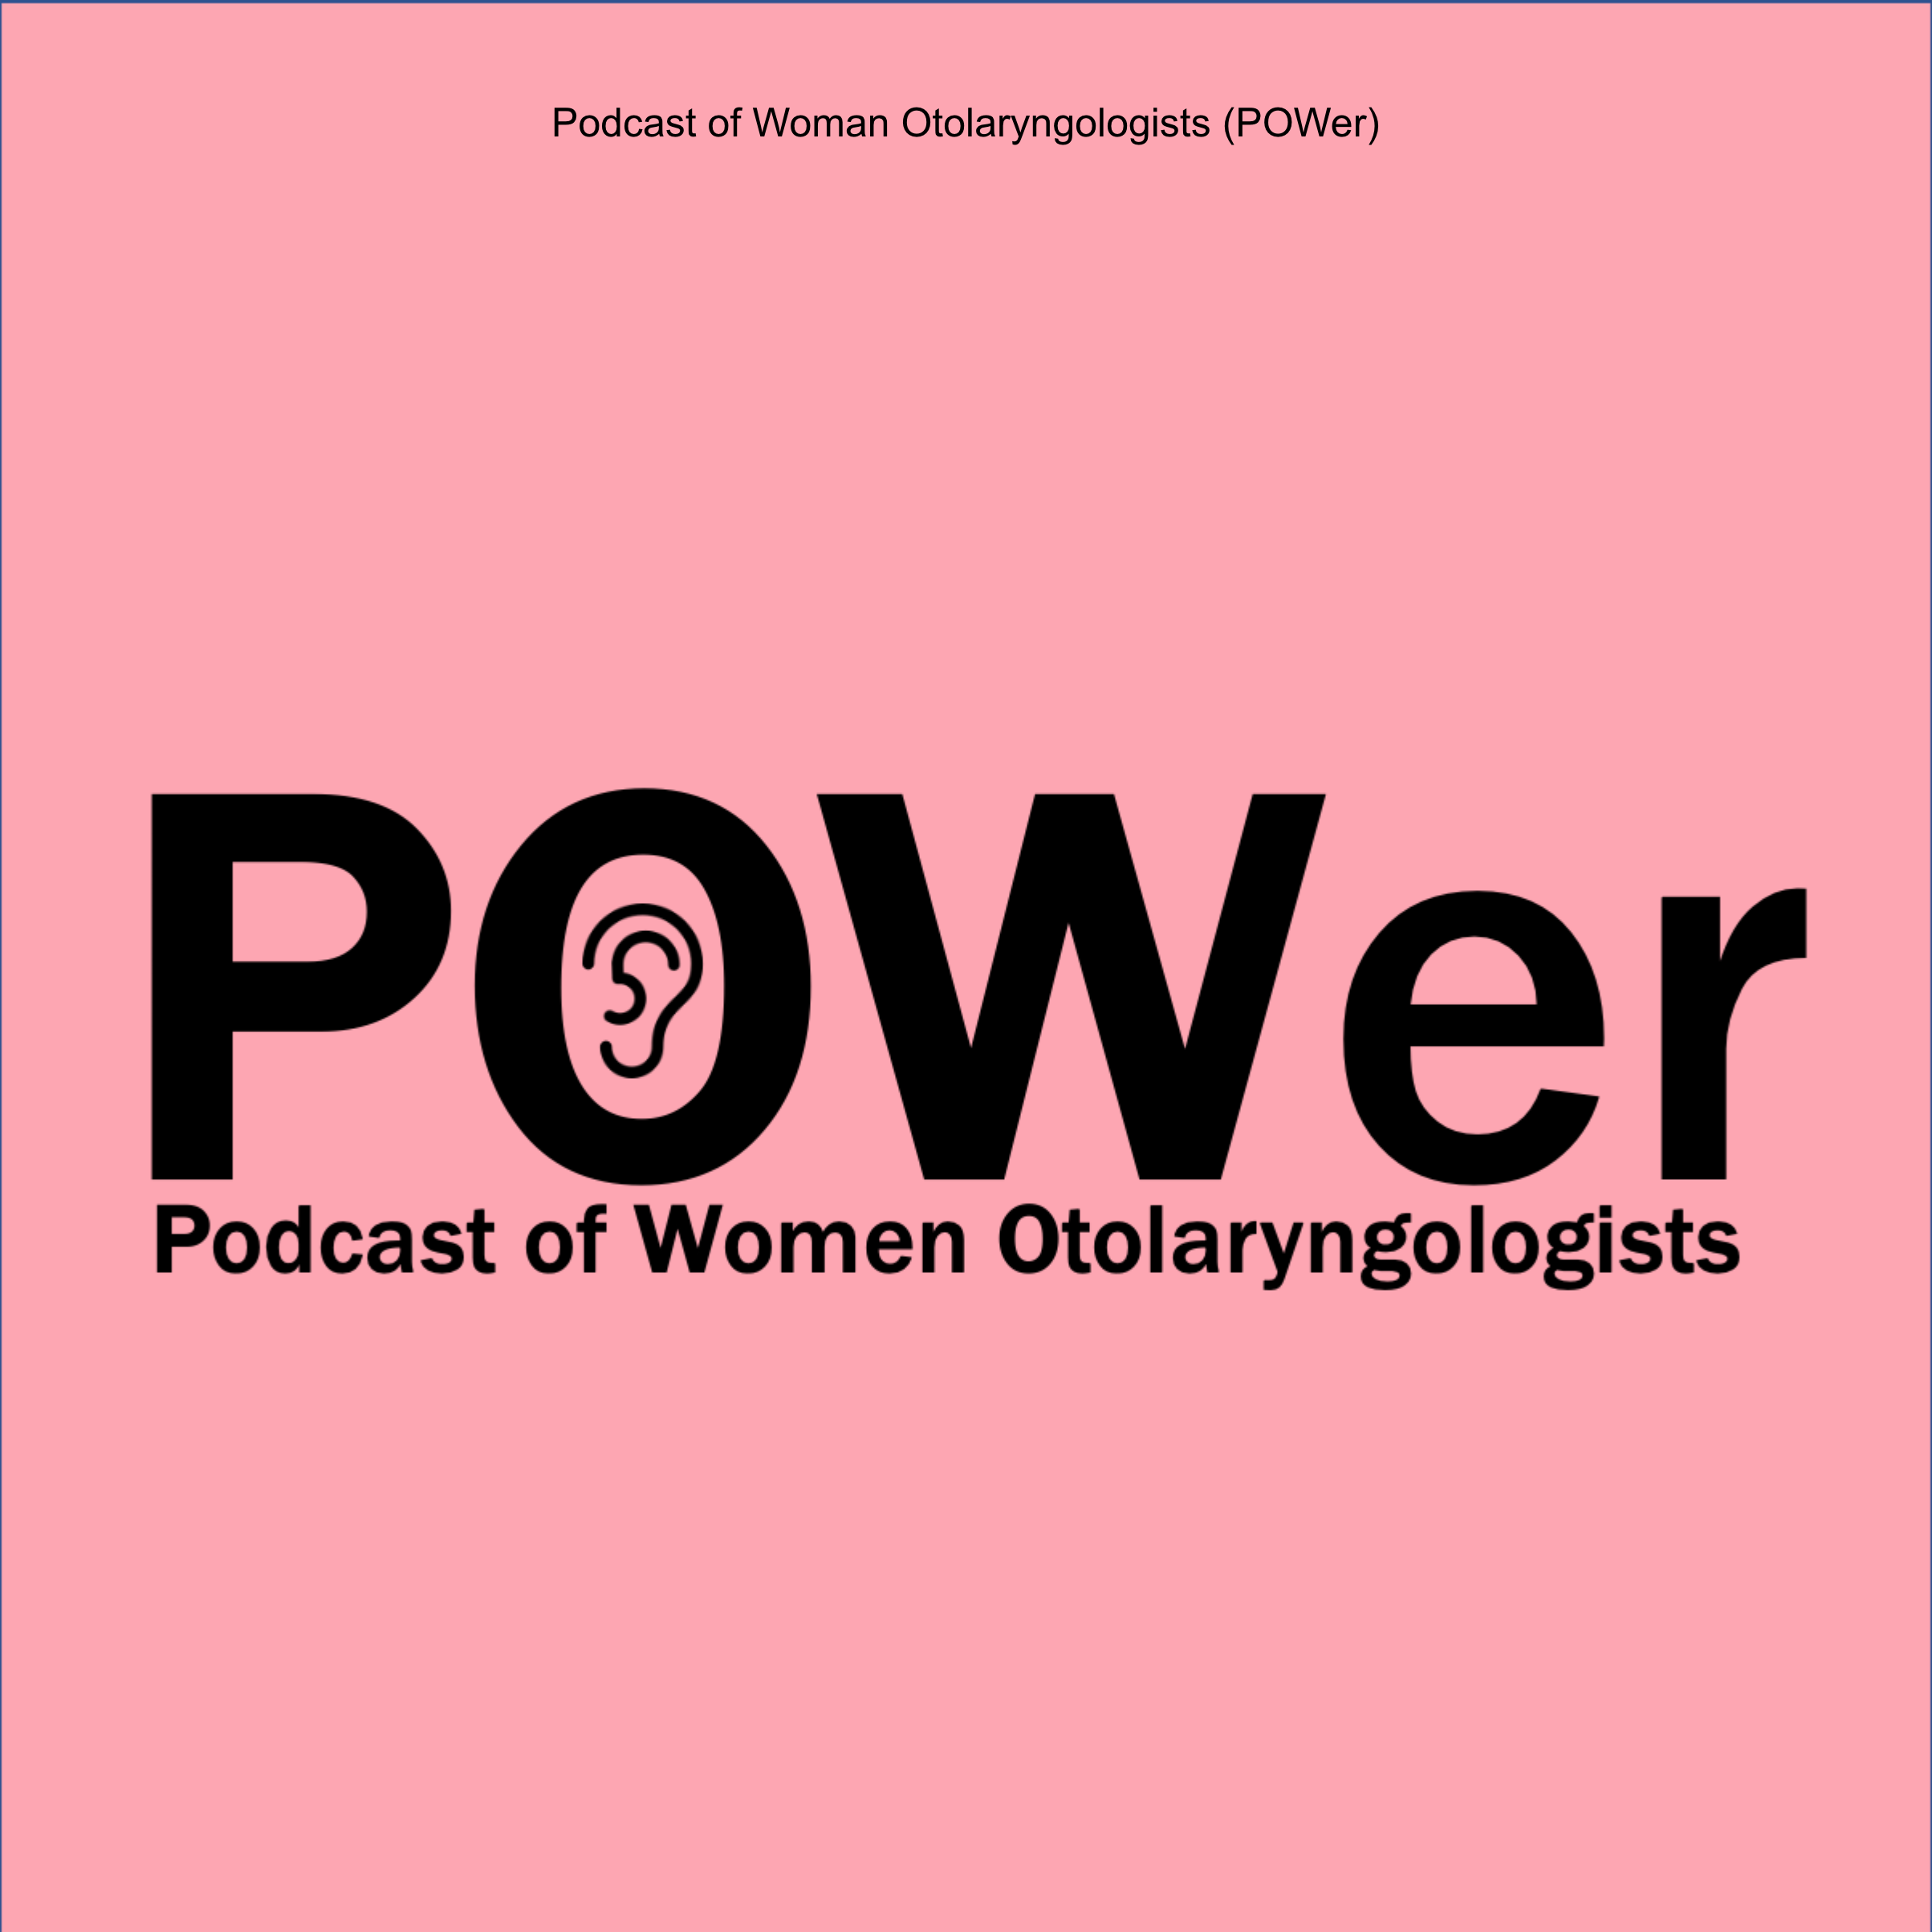 Podcast of Women Otolaryngologists (POWer)